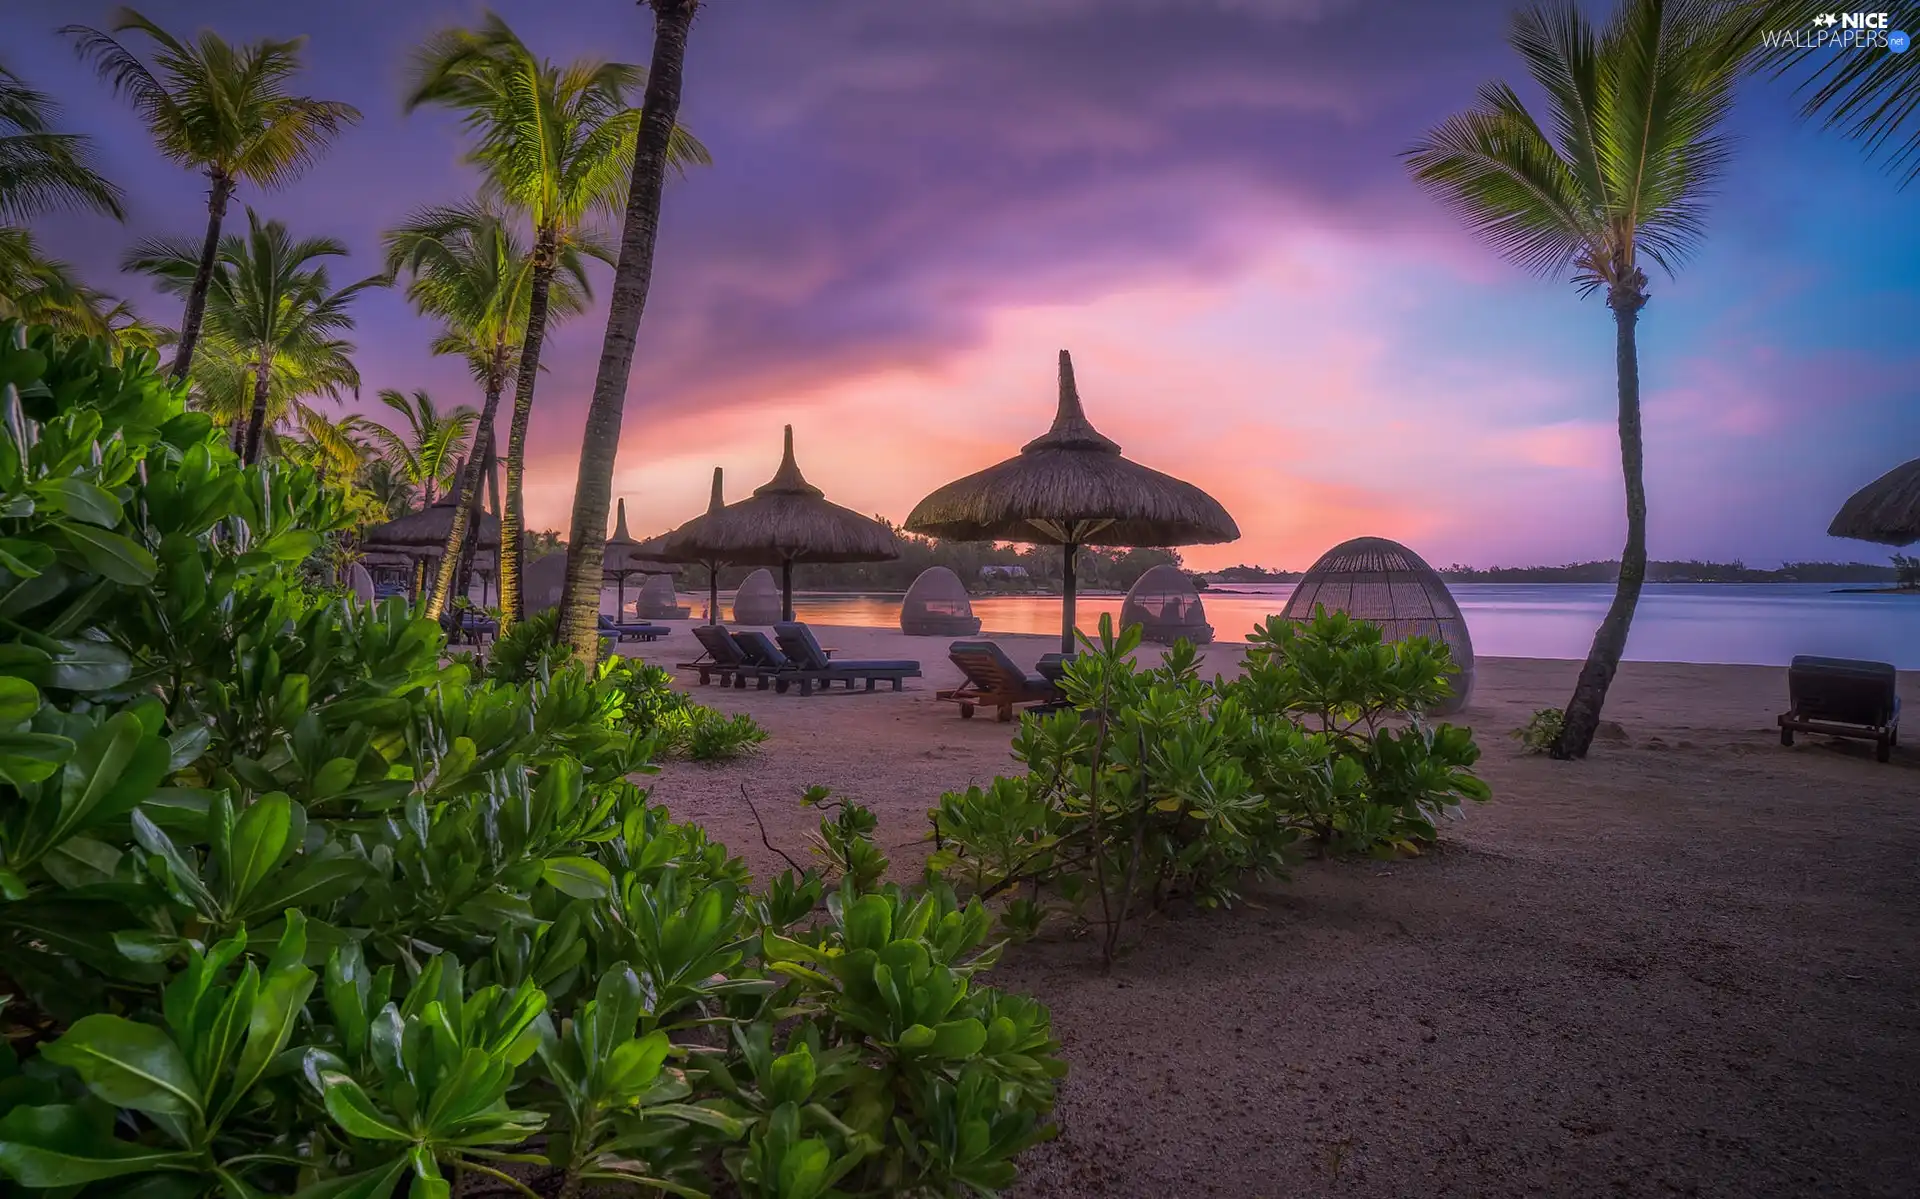 deck chair, Sunshade, Mauritius, Palms, Great Sunsets, Beaches, sea, VEGETATION